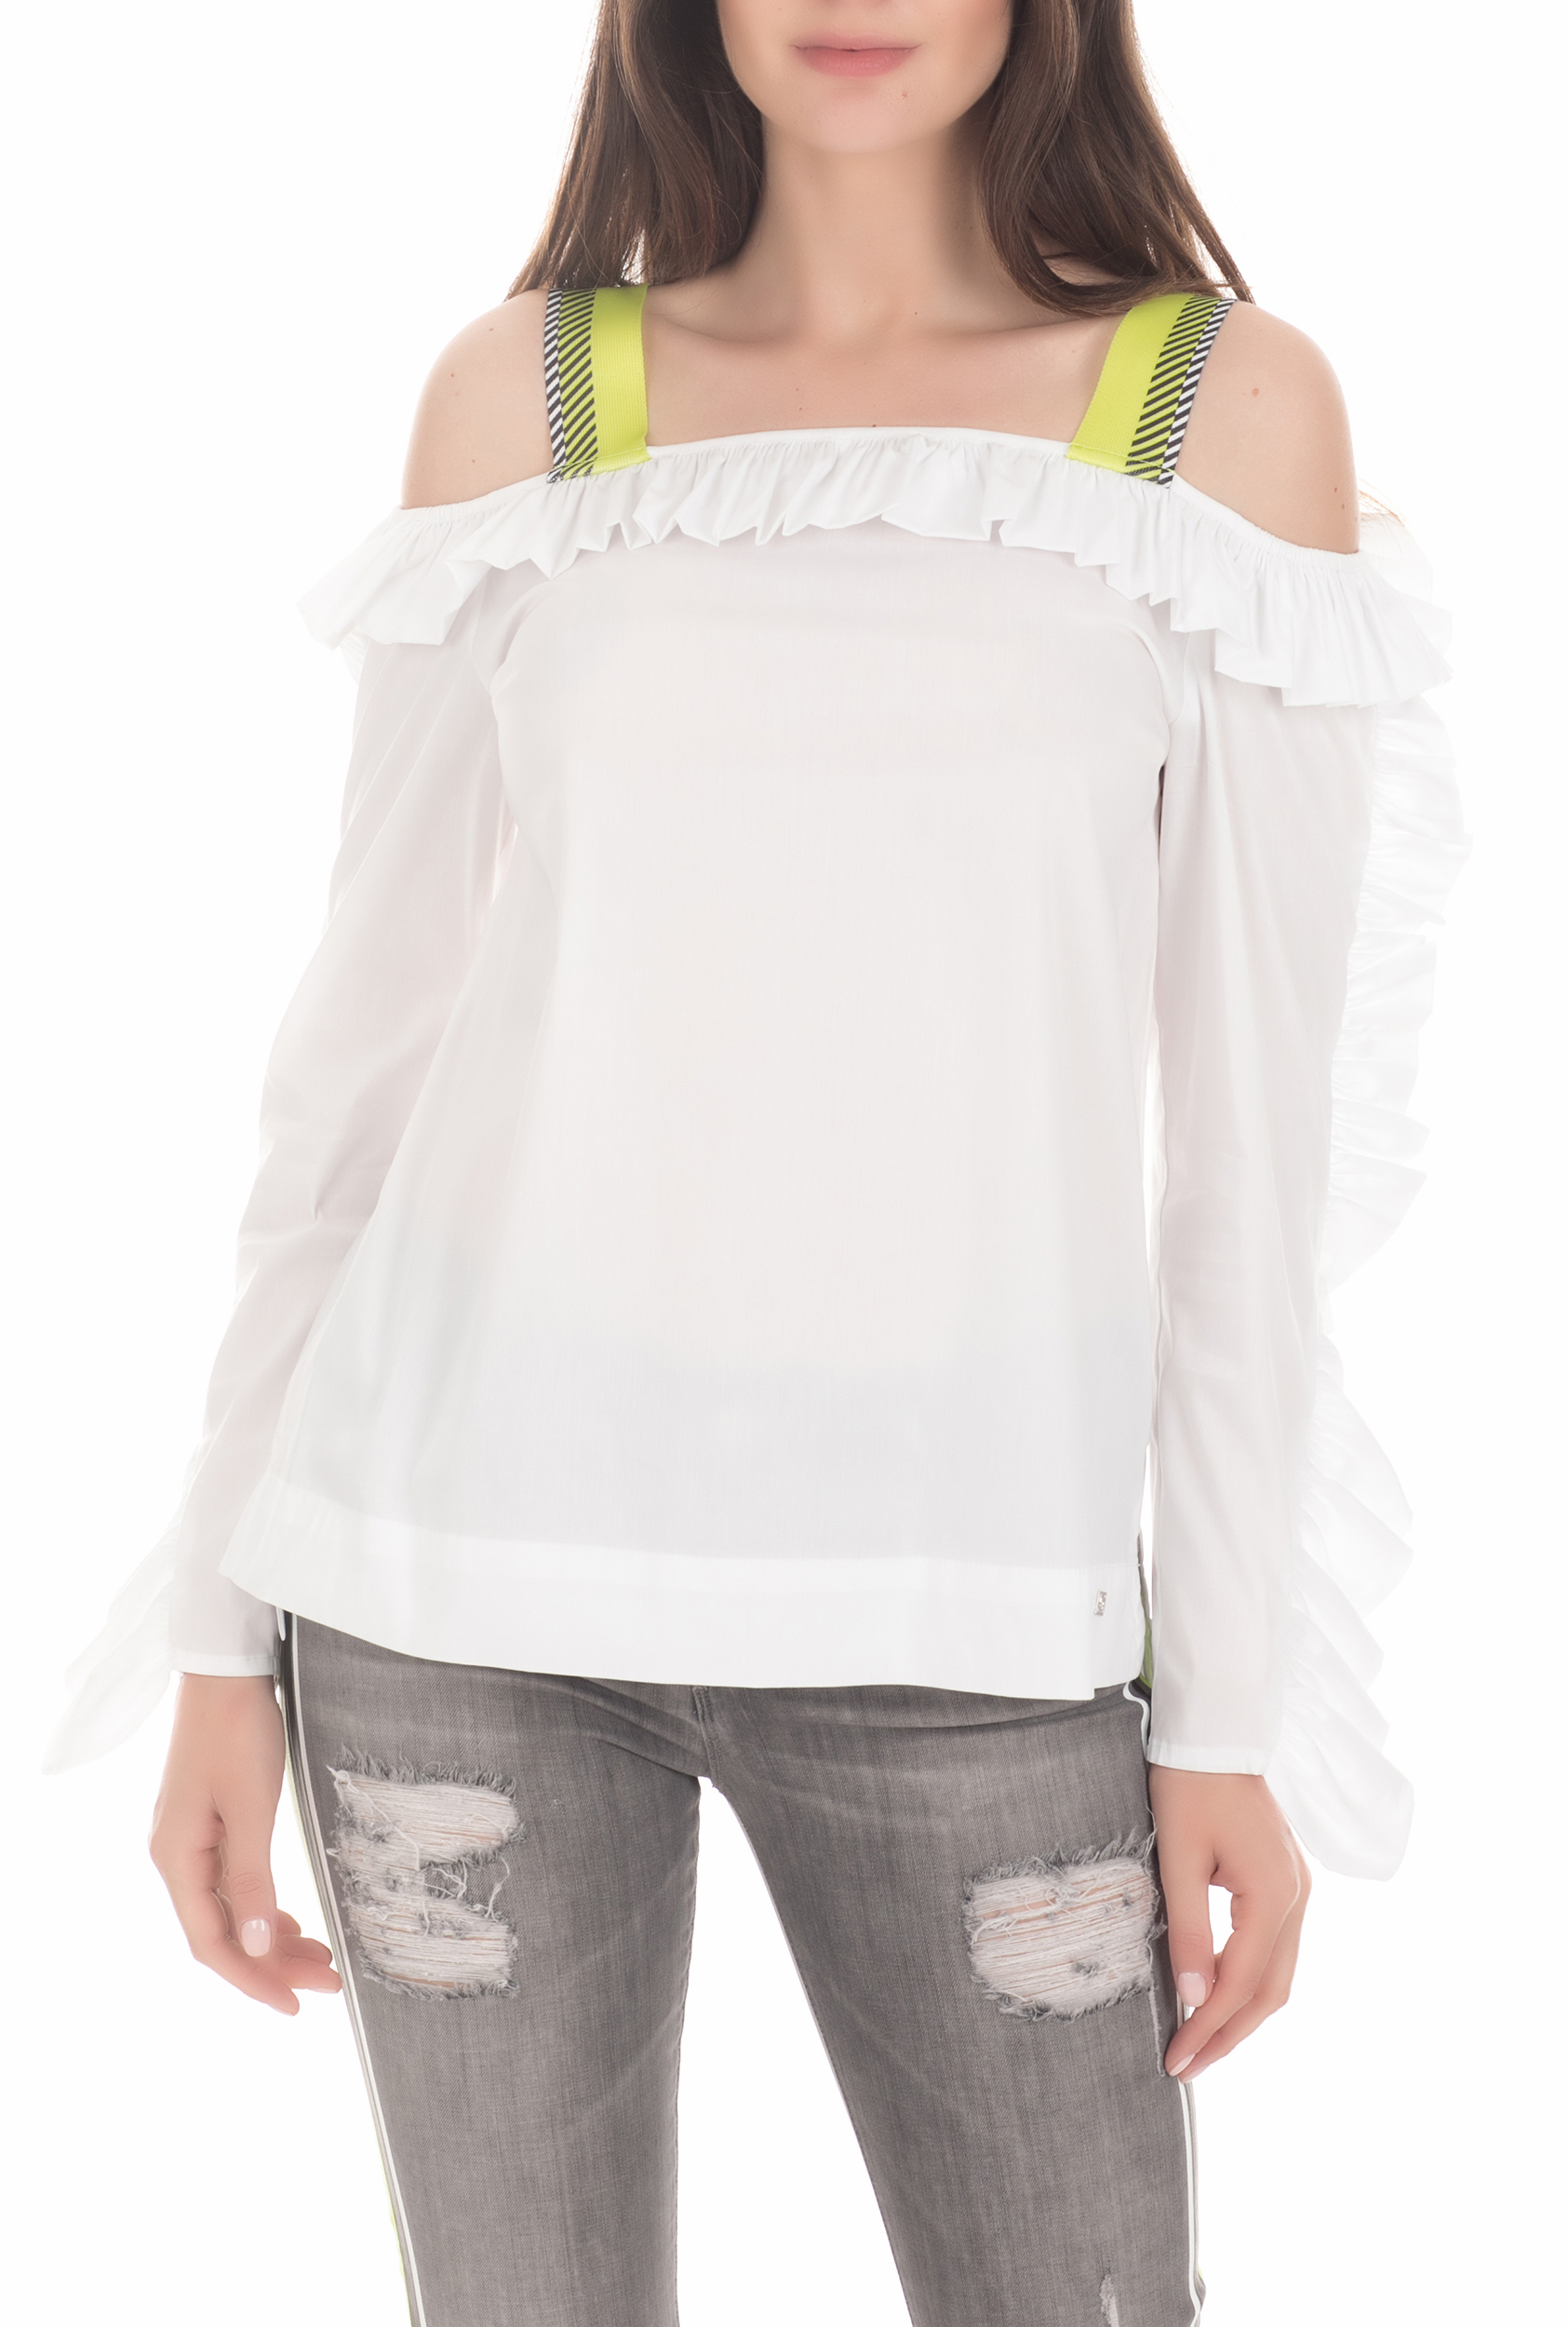 BYBLOS - Γυναικεία μπλούζα BYBLOS OPEN SHOULDER λευκή Γυναικεία/Ρούχα/Πουκάμισα/Μακρυμάνικα